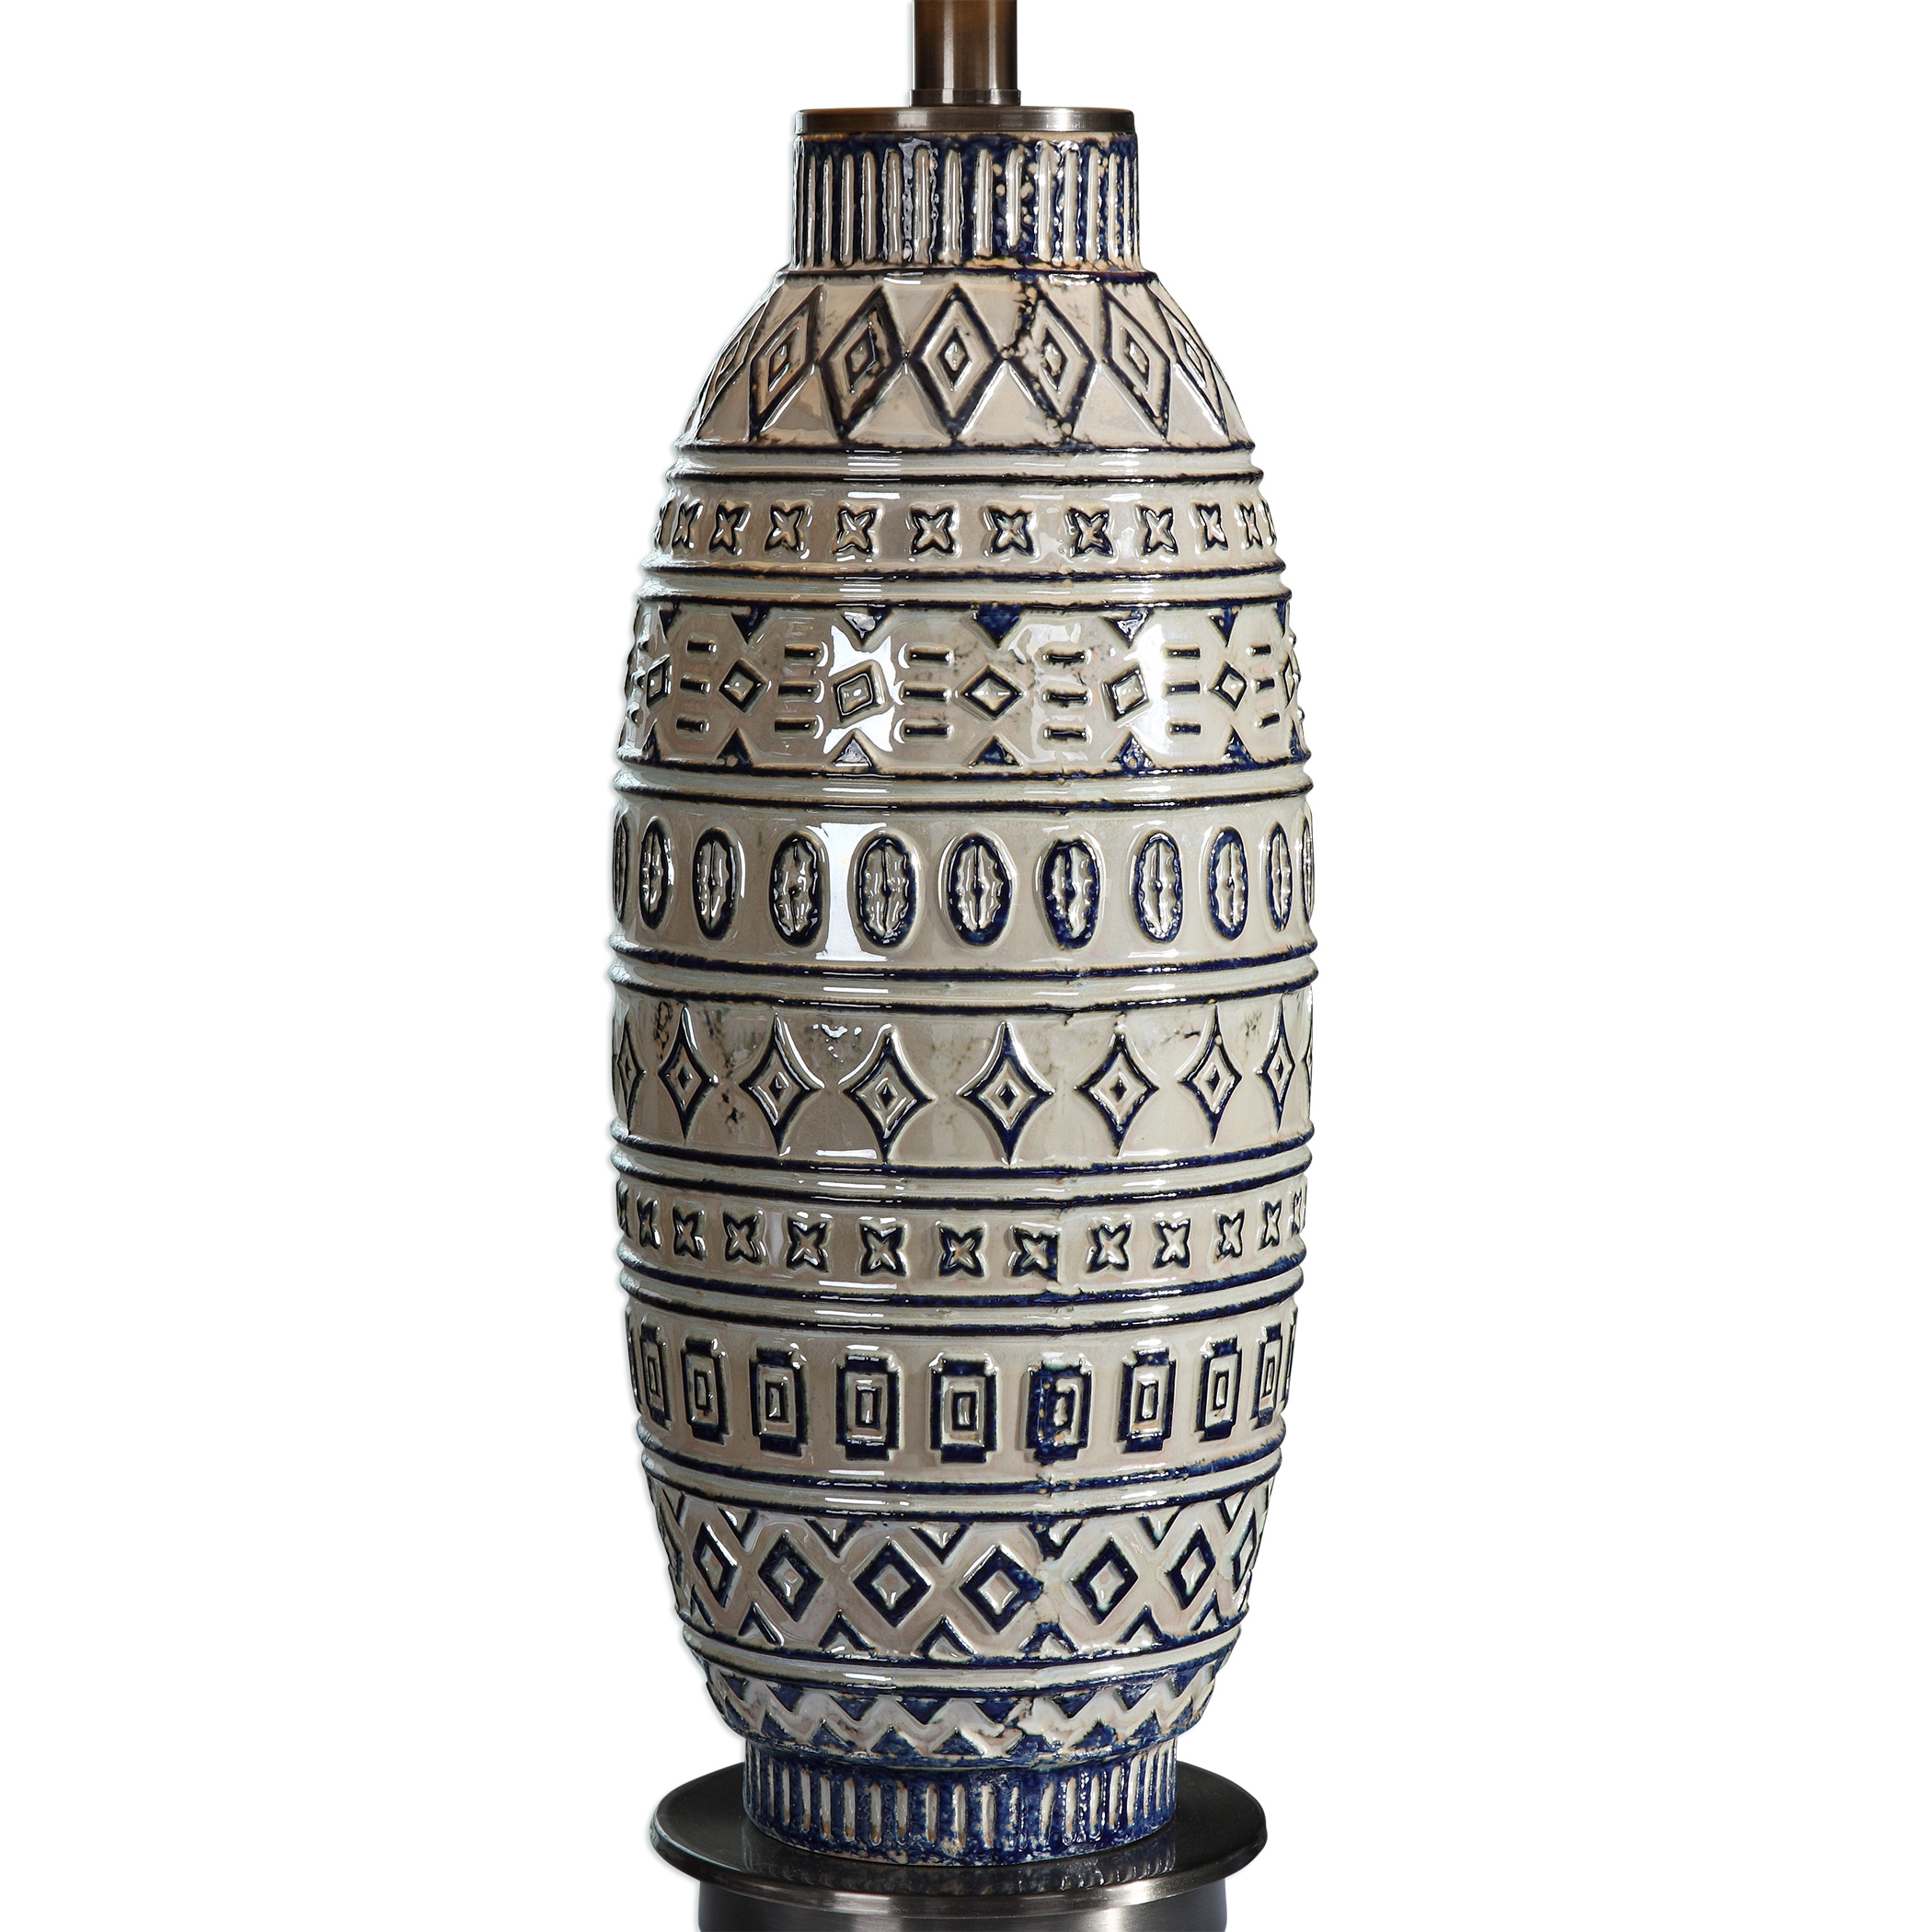 Lokni Aged Ivory Table Lamp - Image 2